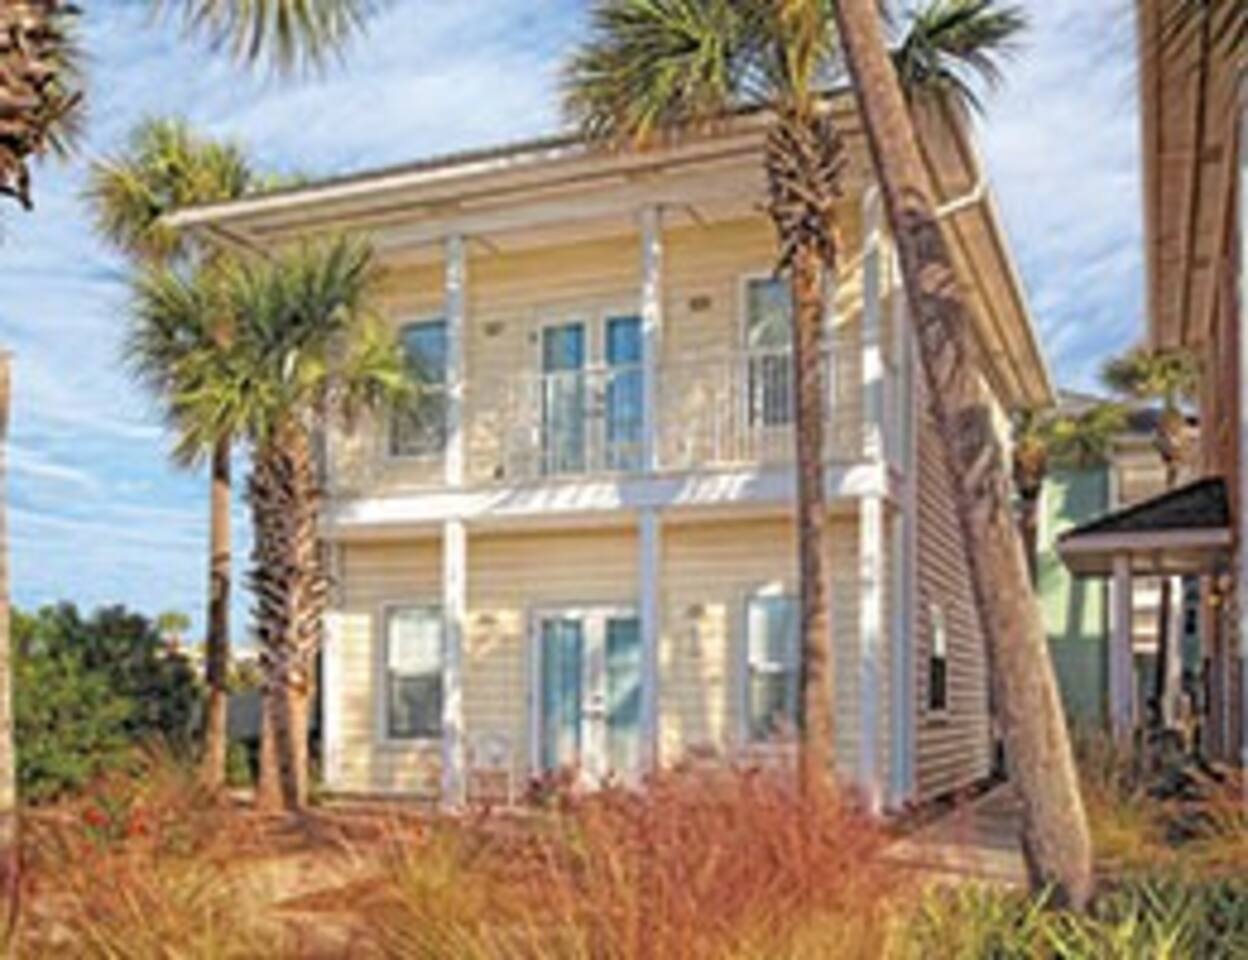 Wyndham Beach Street Cottages 1 Bd Condominiums For Rent In